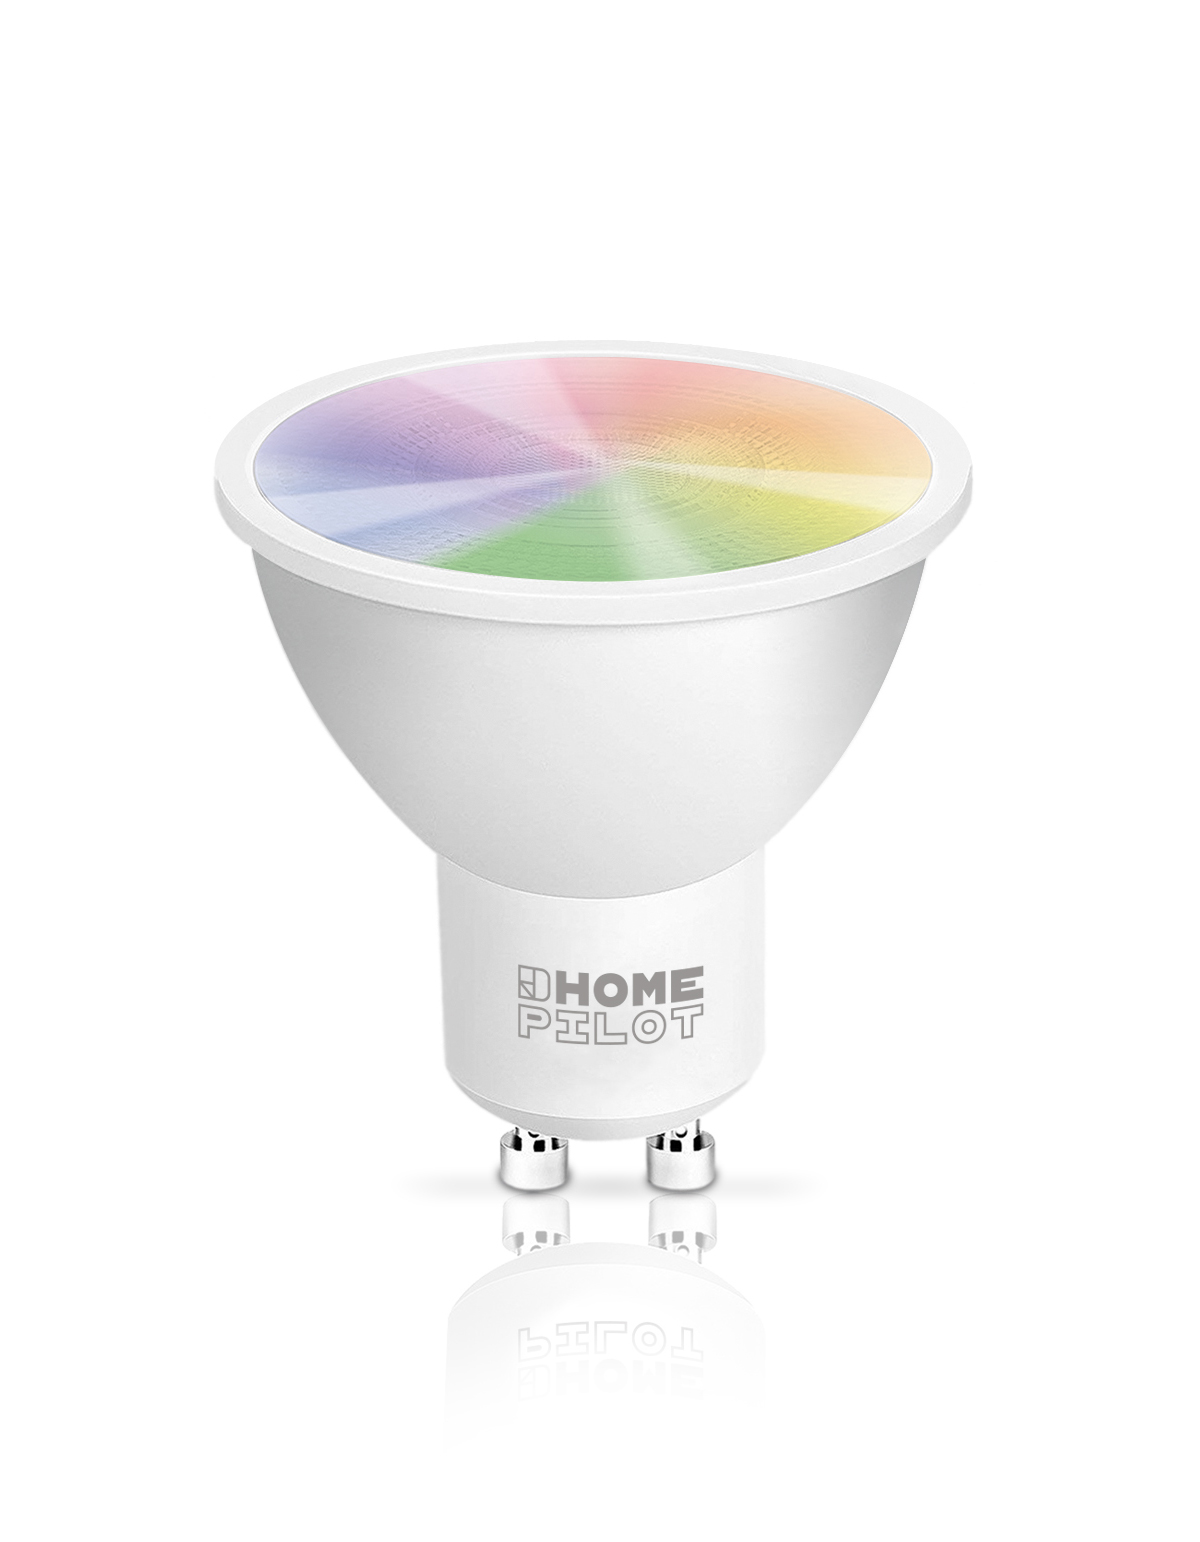 Colour White GU10 LED-Lampe mit and HOMEPILOT addZ Zigbee-Funkstandard Leuchtmittel RGBW